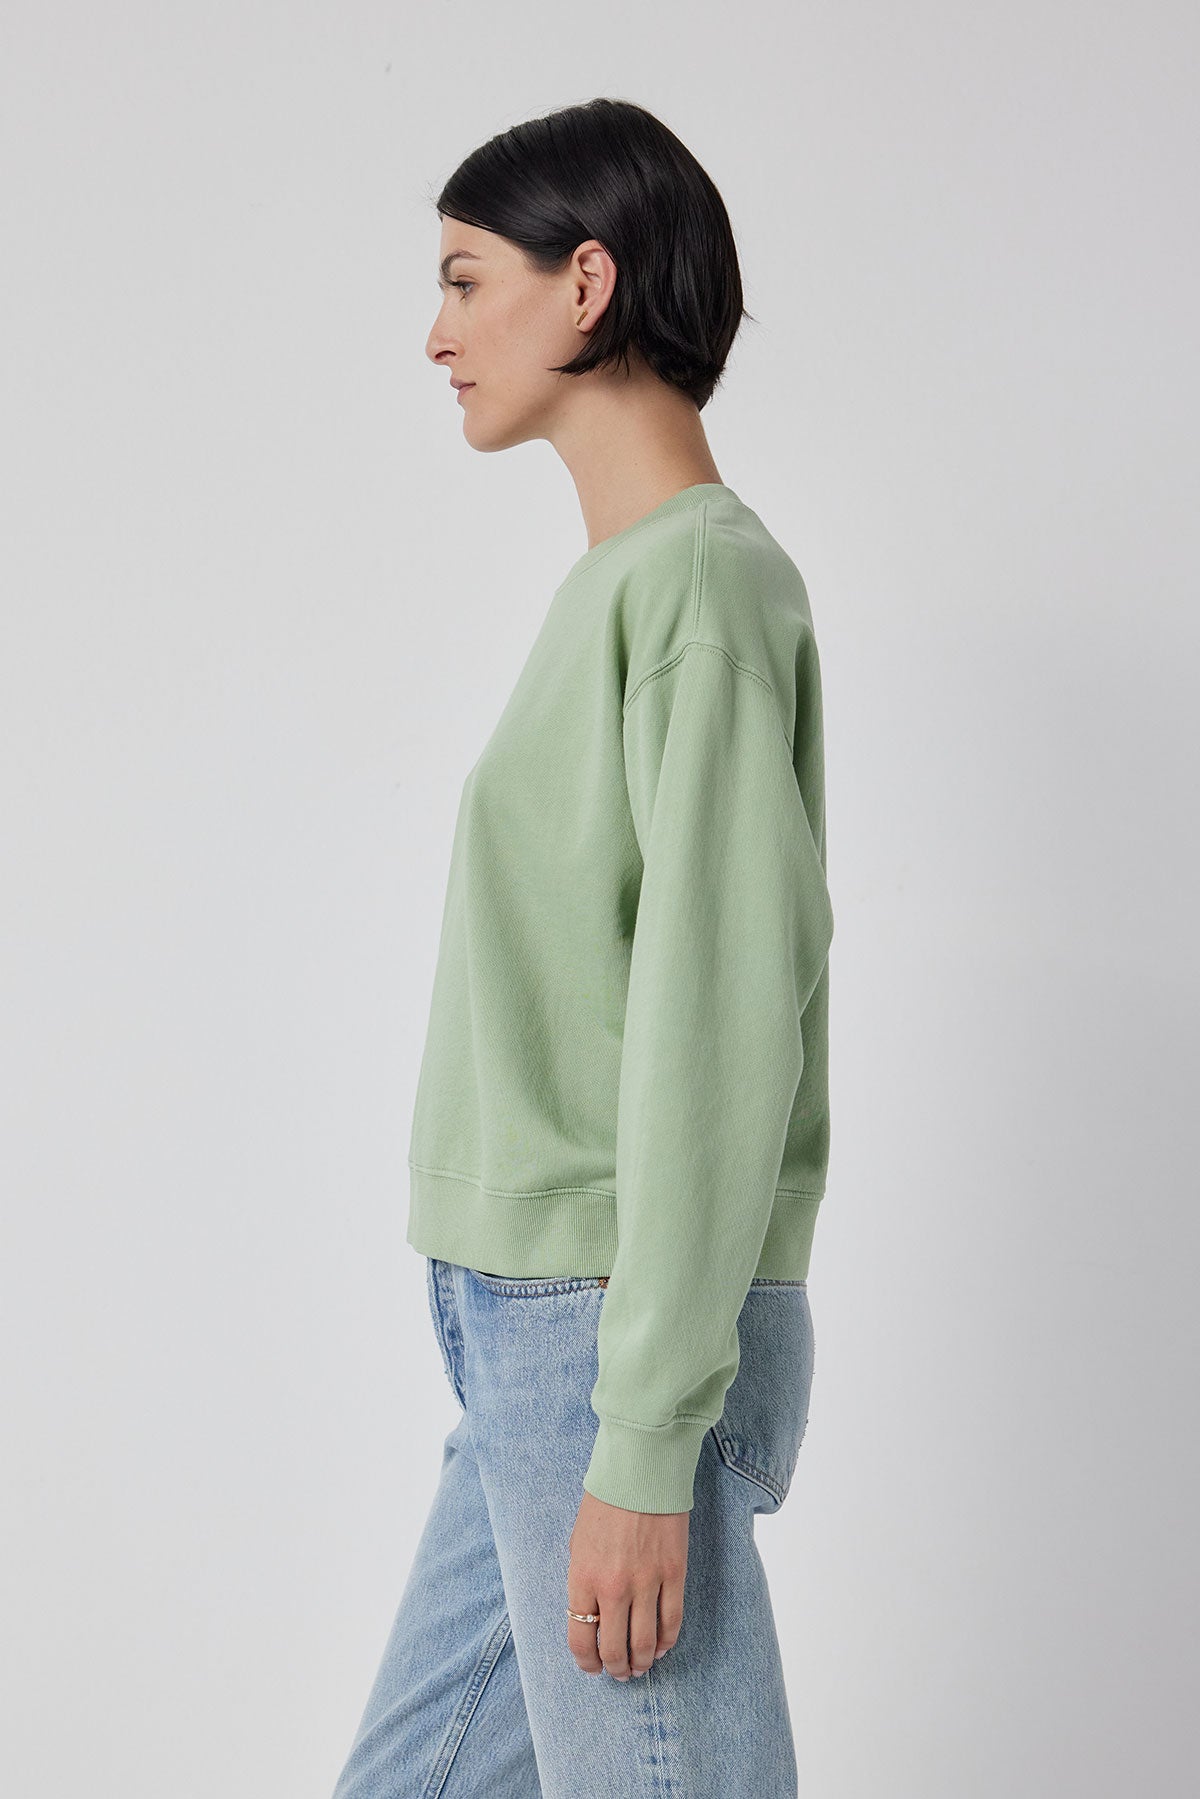 The model is wearing a Velvet by Jenny Graham Ynez sweatshirt and jeans.-36212423196865